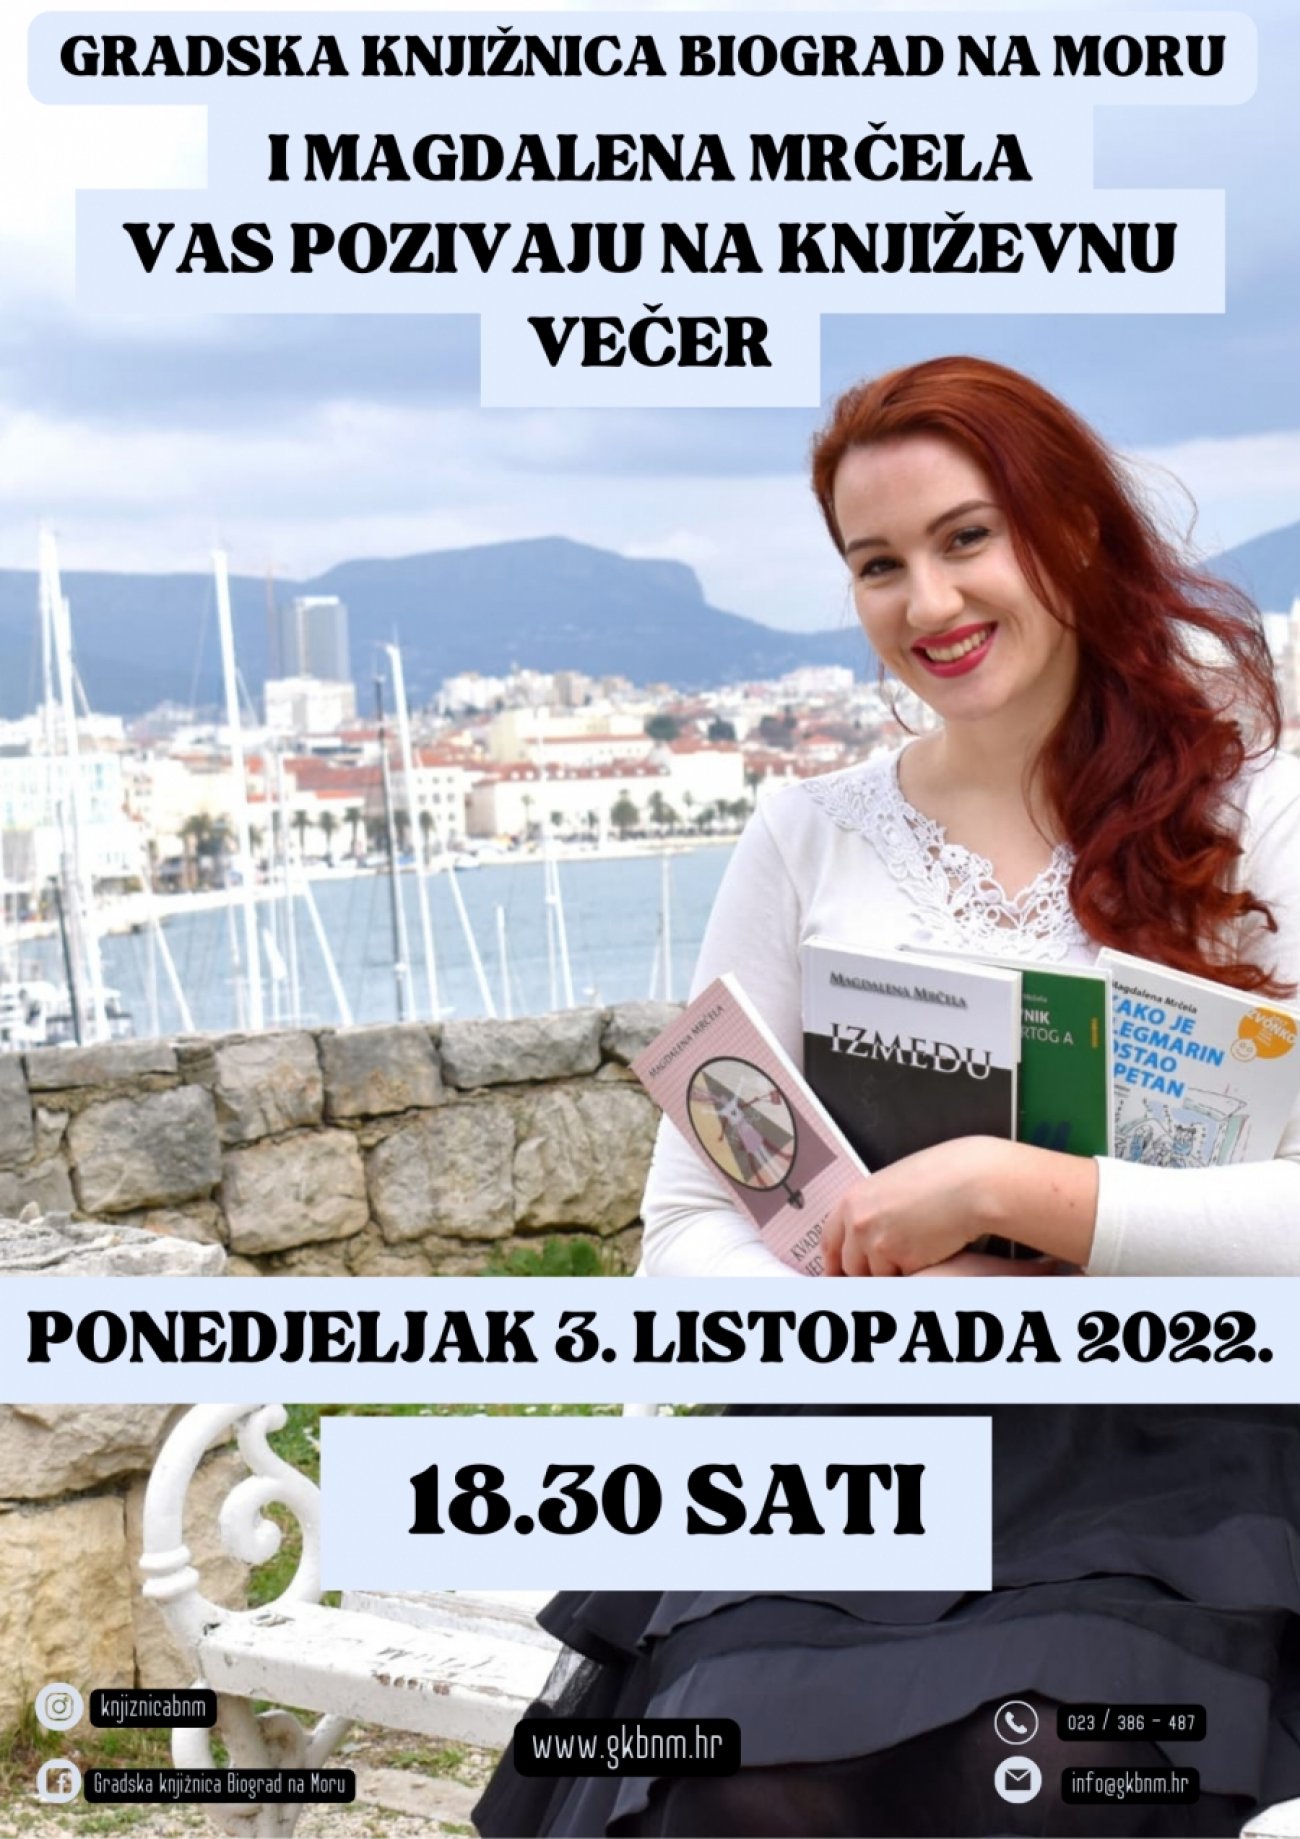 Gradska knjižnica Biograd na Moru vas poziva na književnu večer sa spisateljicom Magdalenom Mrčelom